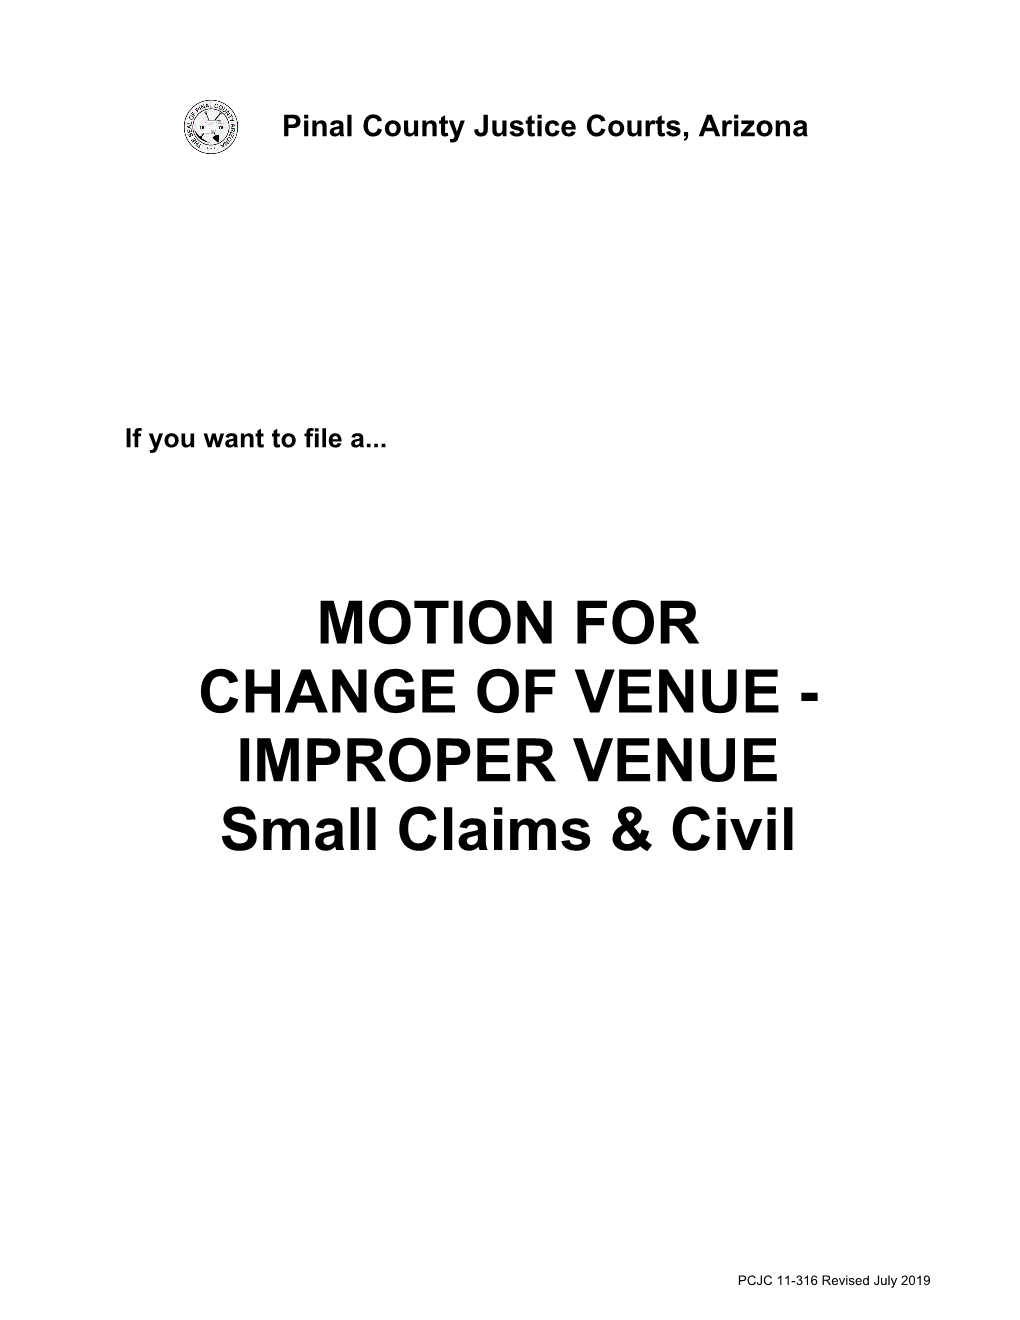 MOTION for CHANGE of VENUE - IMPROPER VENUE Small Claims & Civil